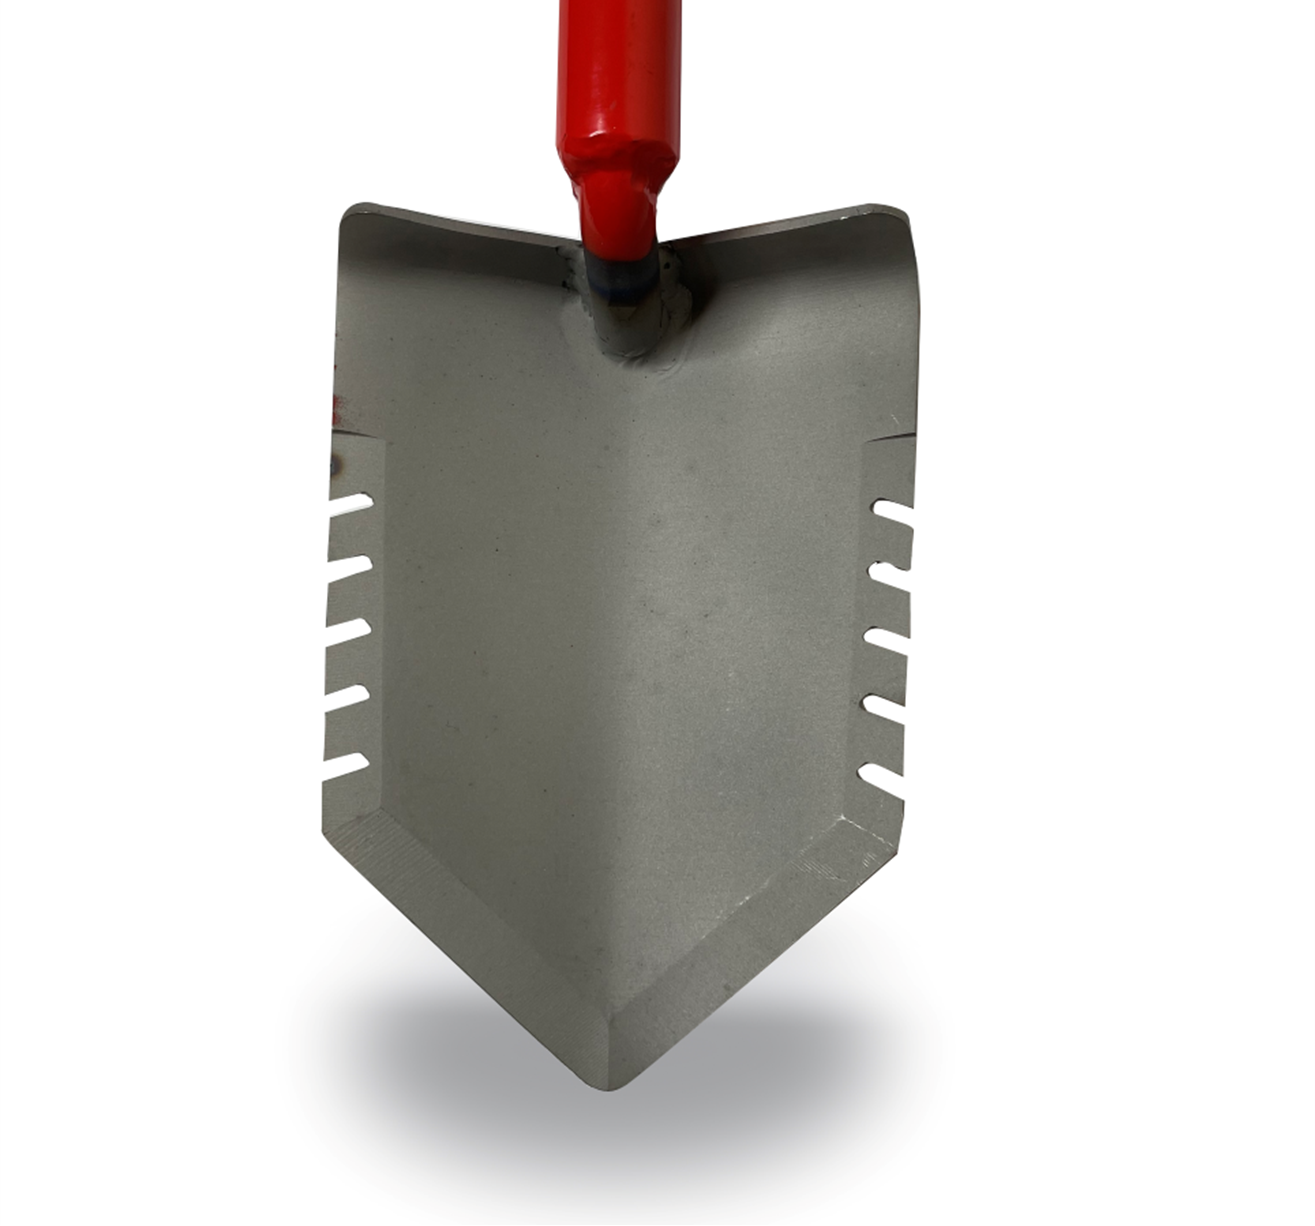 Red Garden Shovel blade closeup photo with serrations